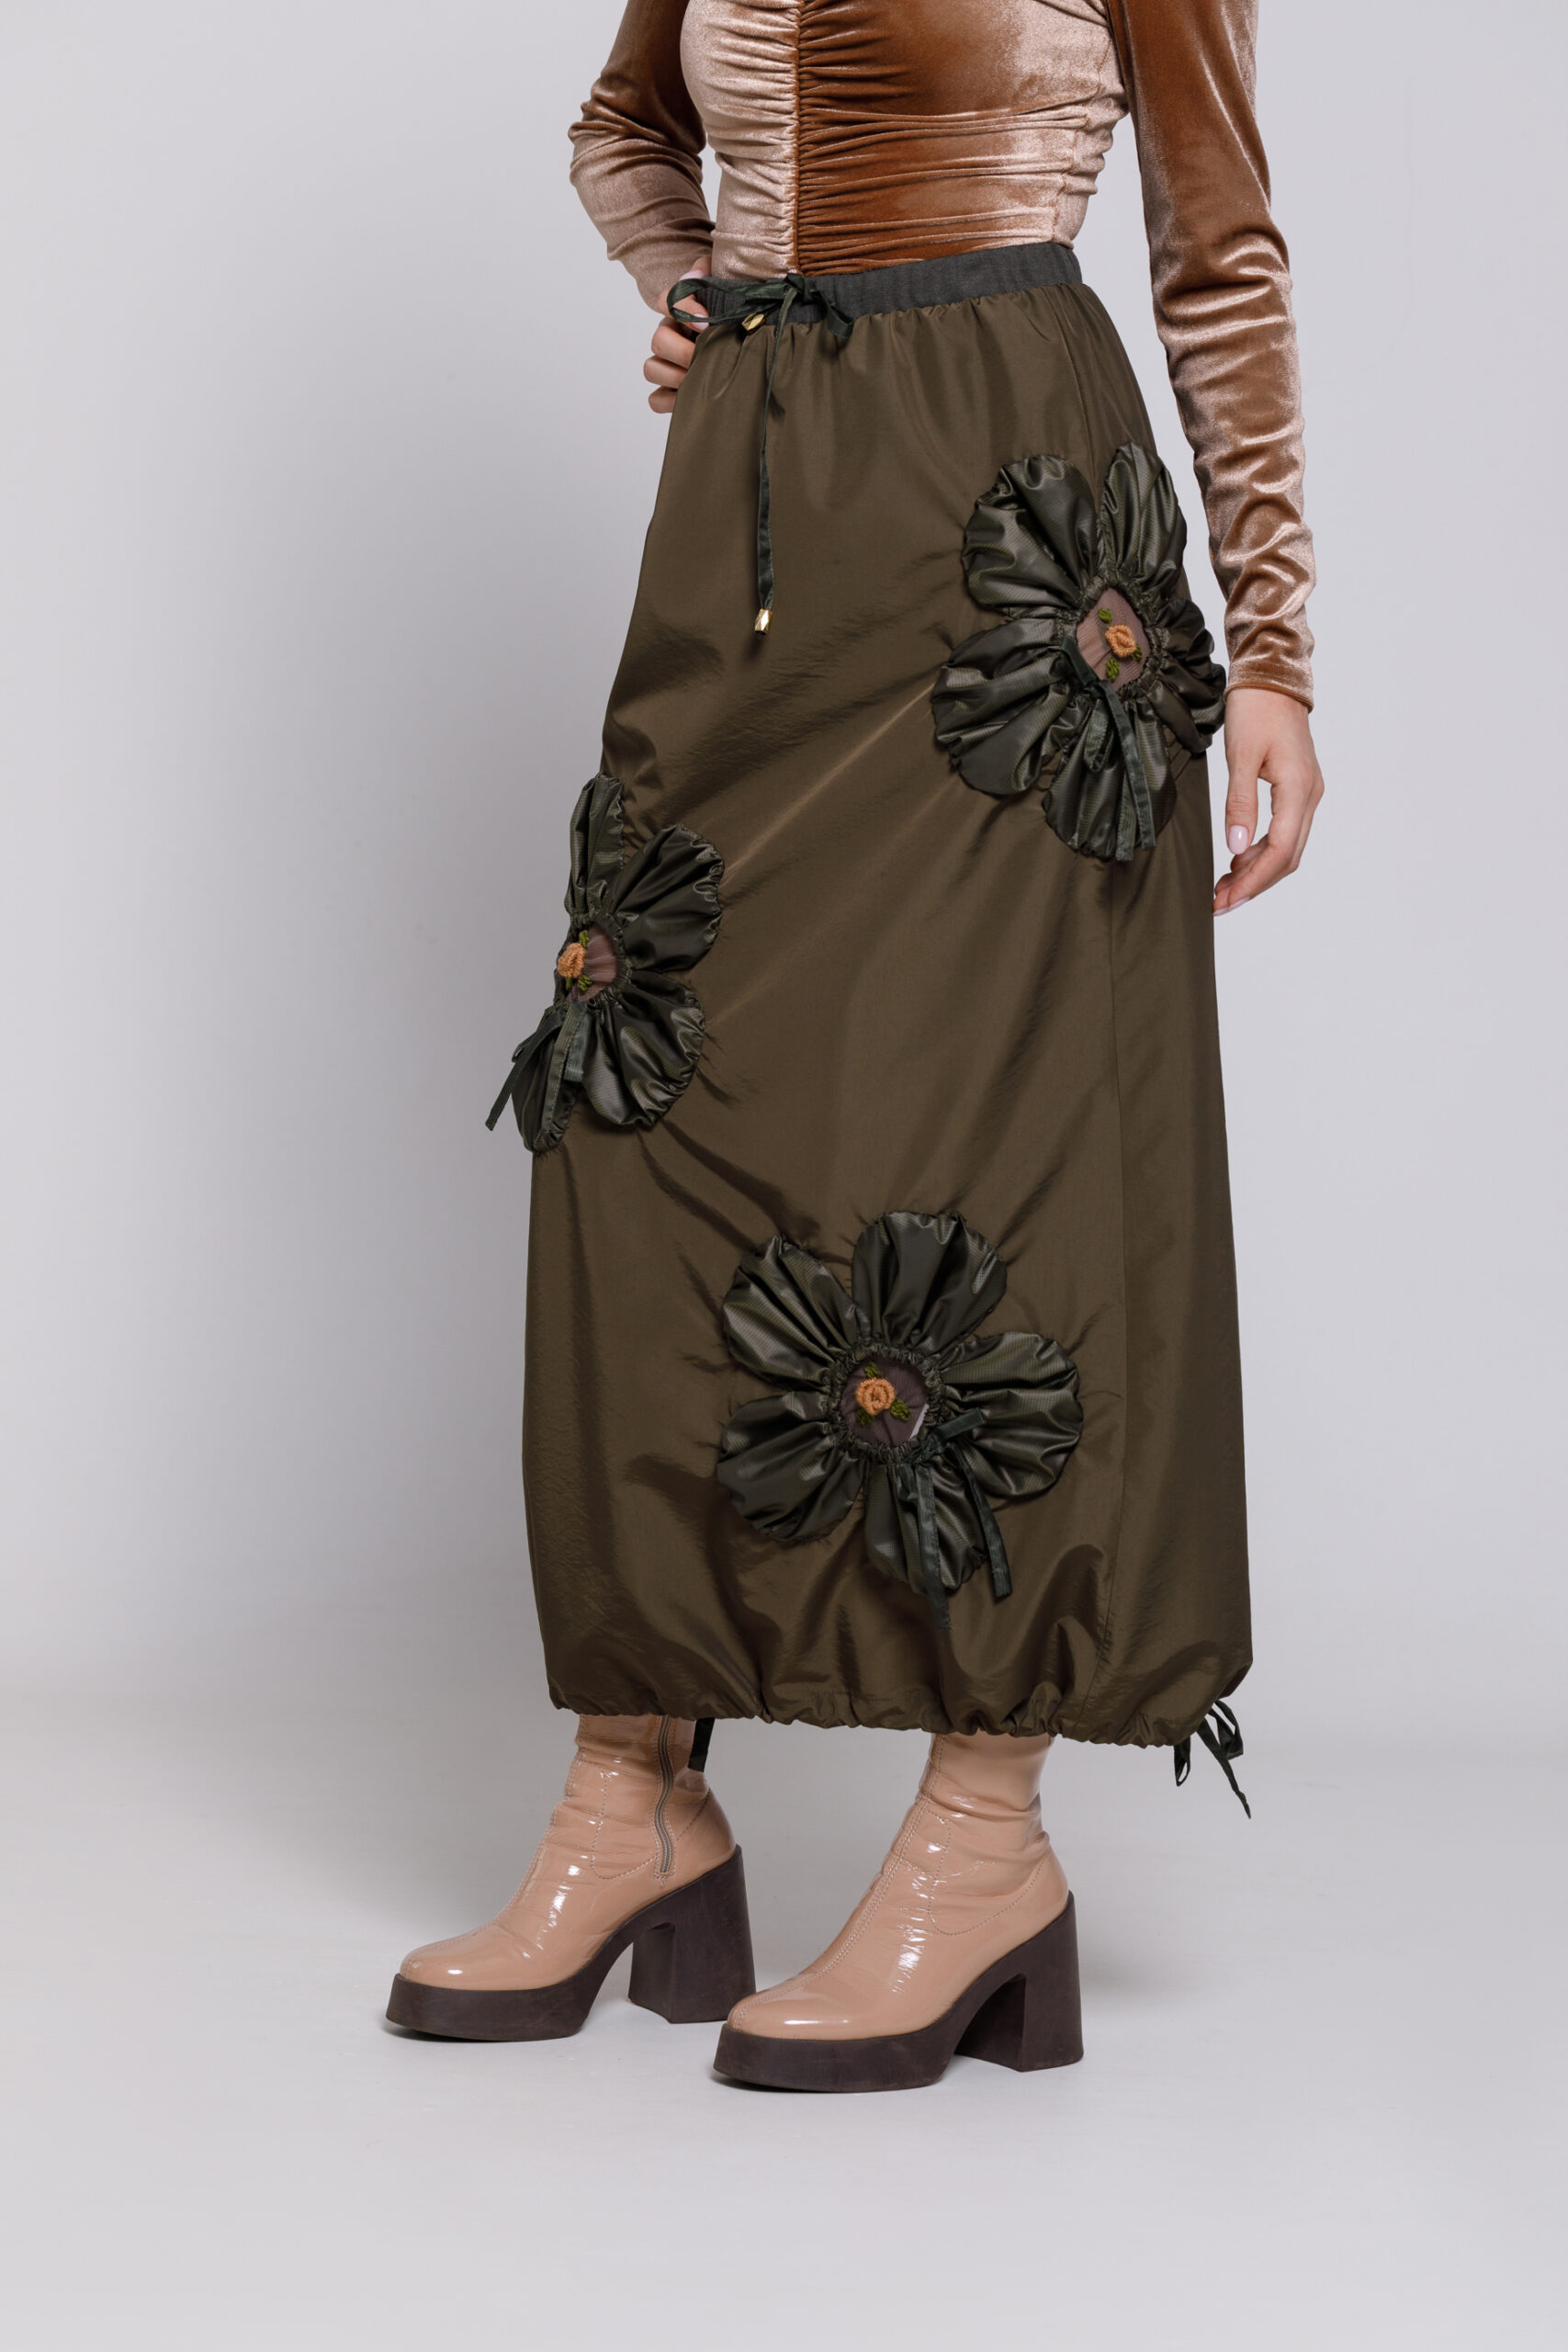 FLORY khaki skirt with volumetric flowers. Natural fabrics, original design, handmade embroidery